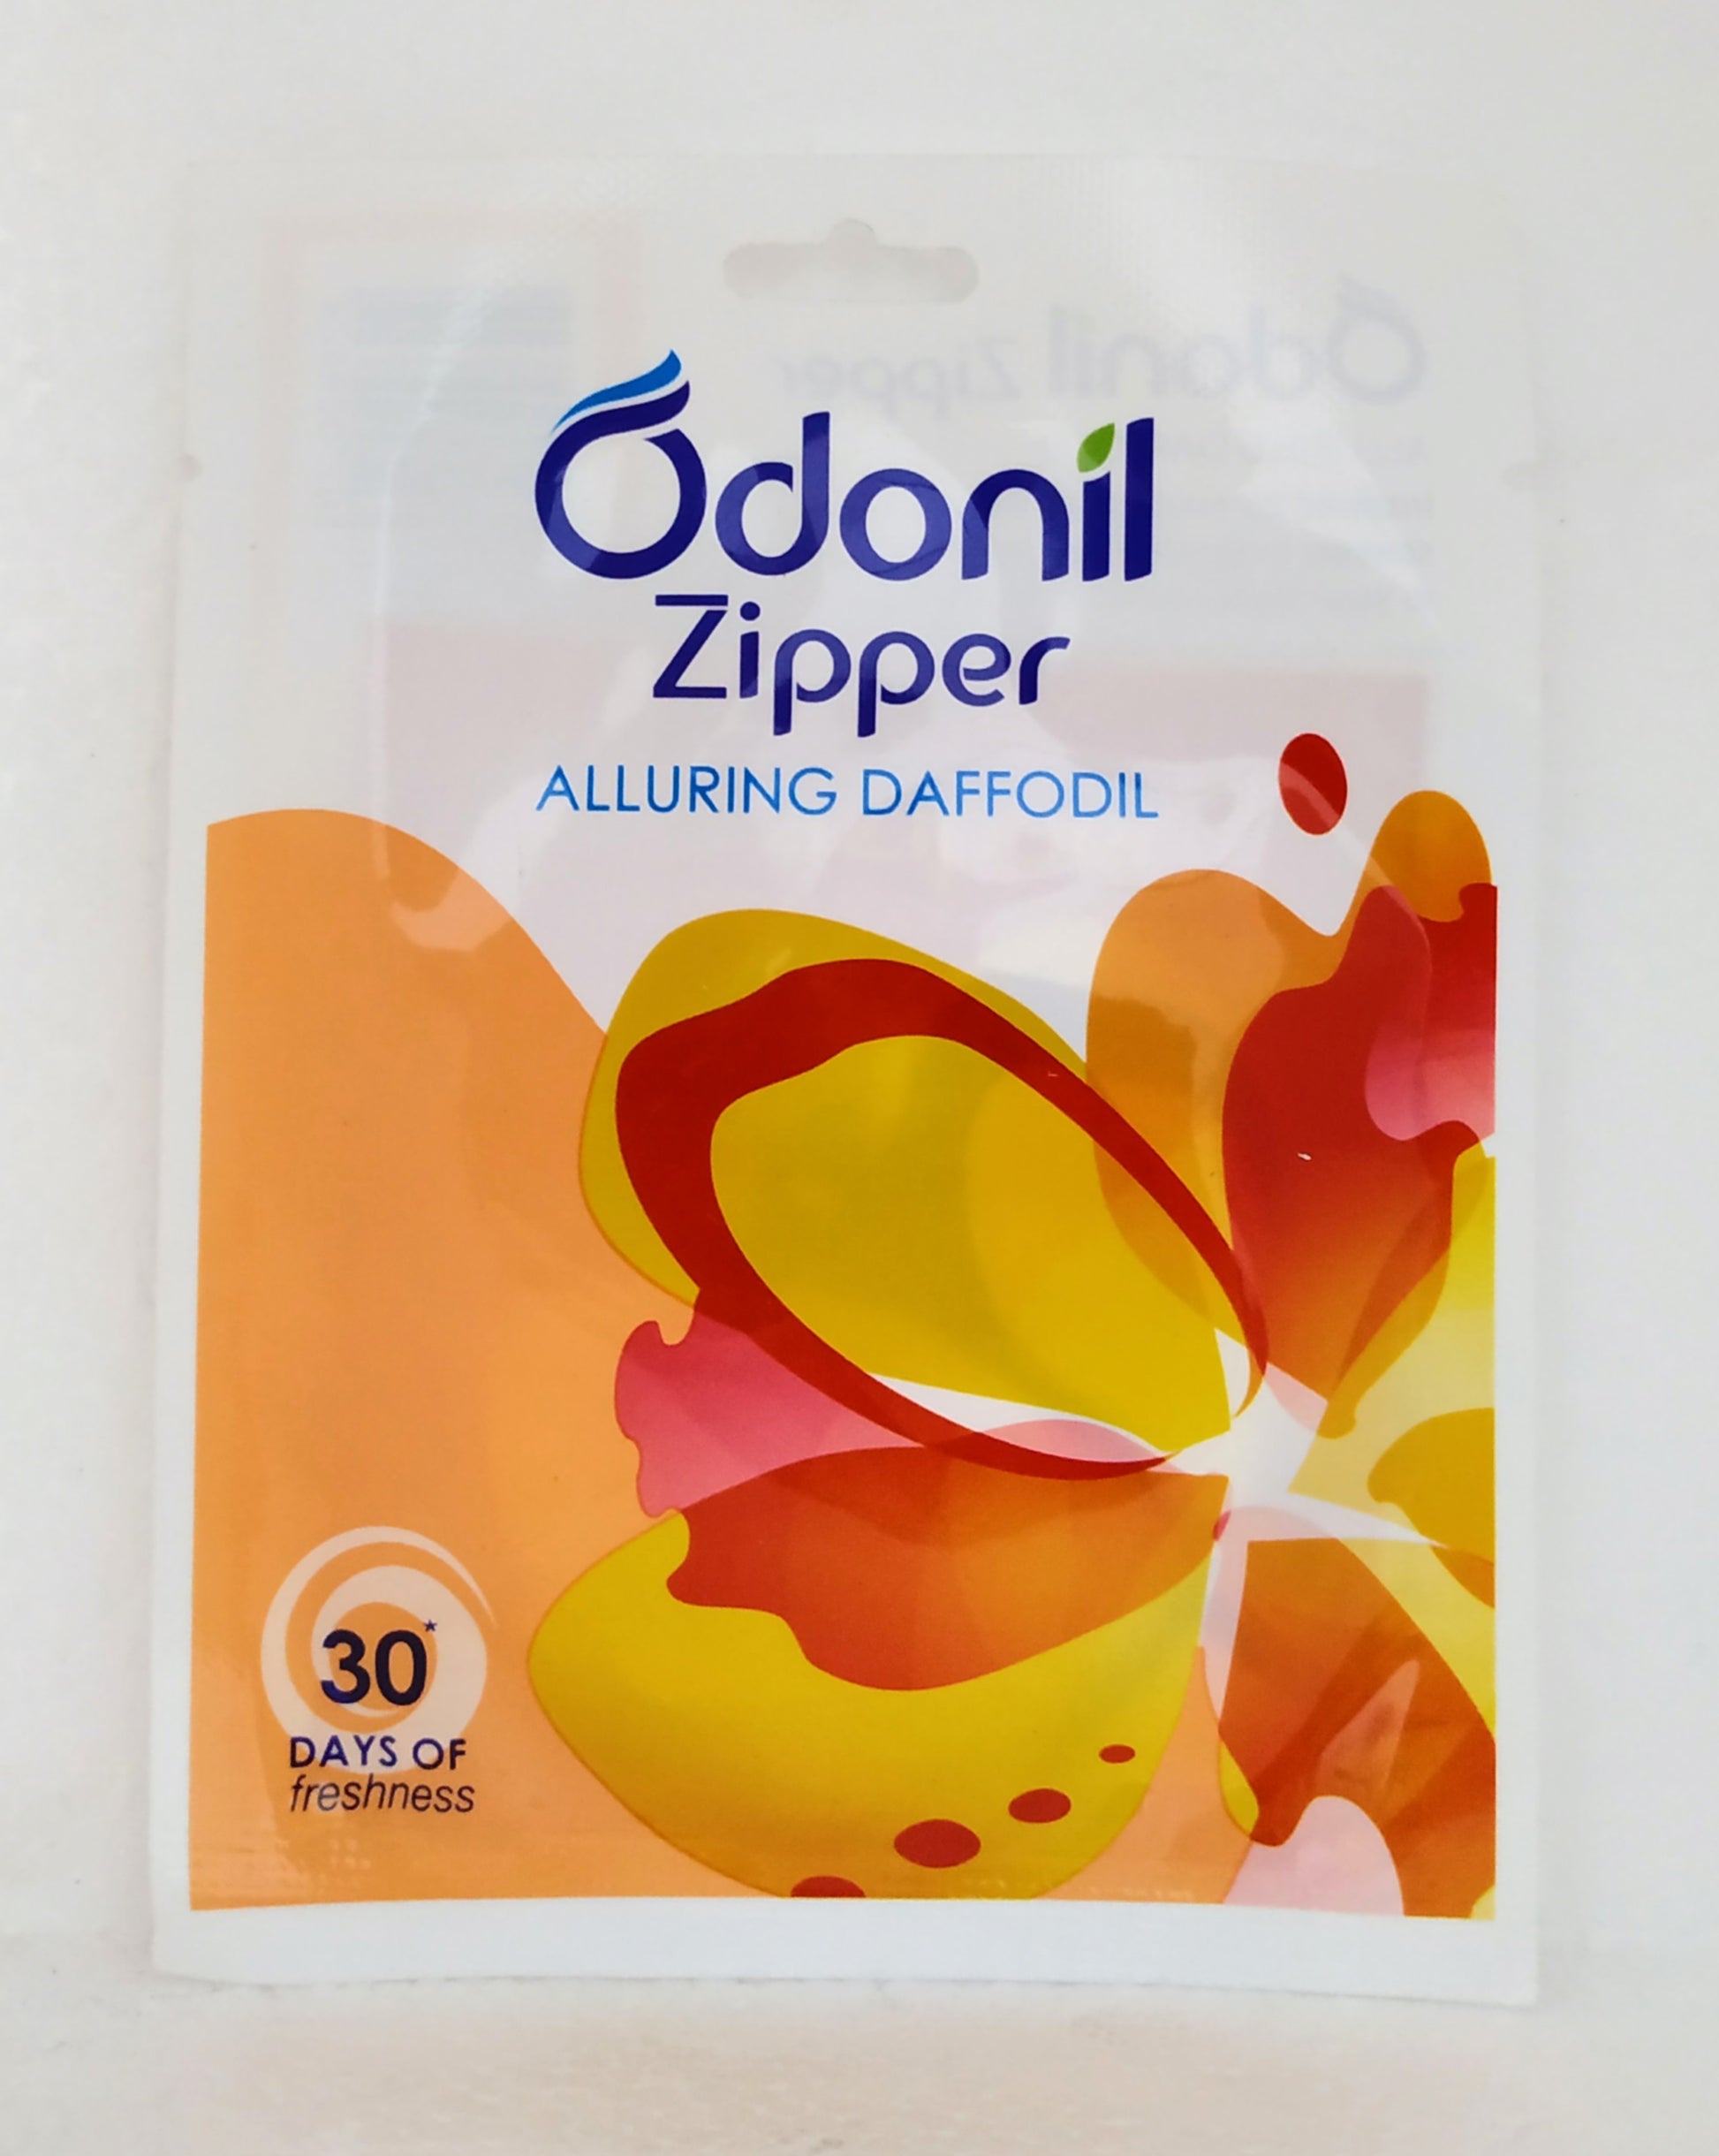 Shop Odonil zipper - Alluring daffodil at price 55.00 from Dabur Online - Ayush Care